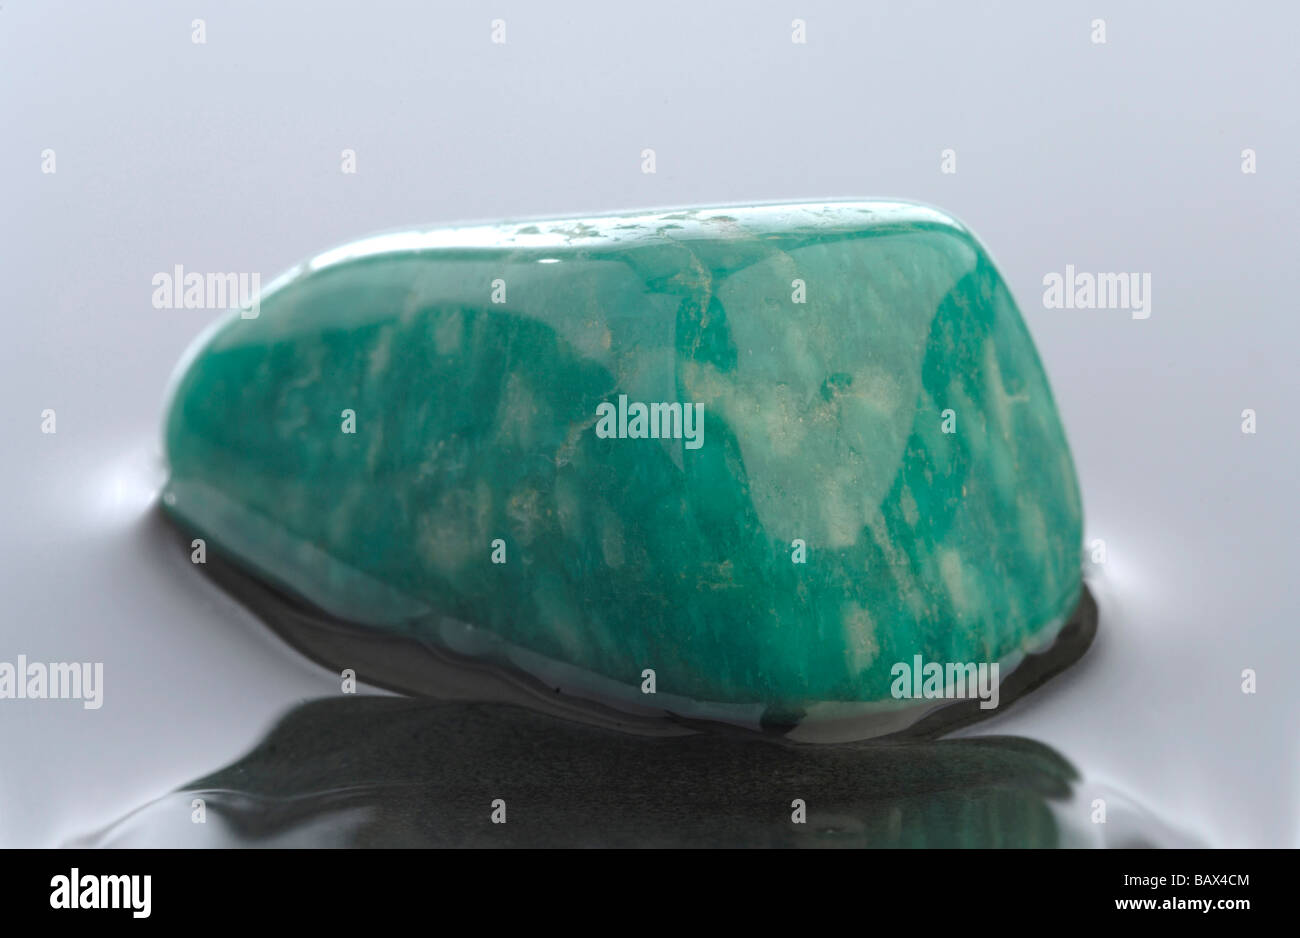 Pierre de guérison amazon stone / amazonite Photo Stock - Alamy